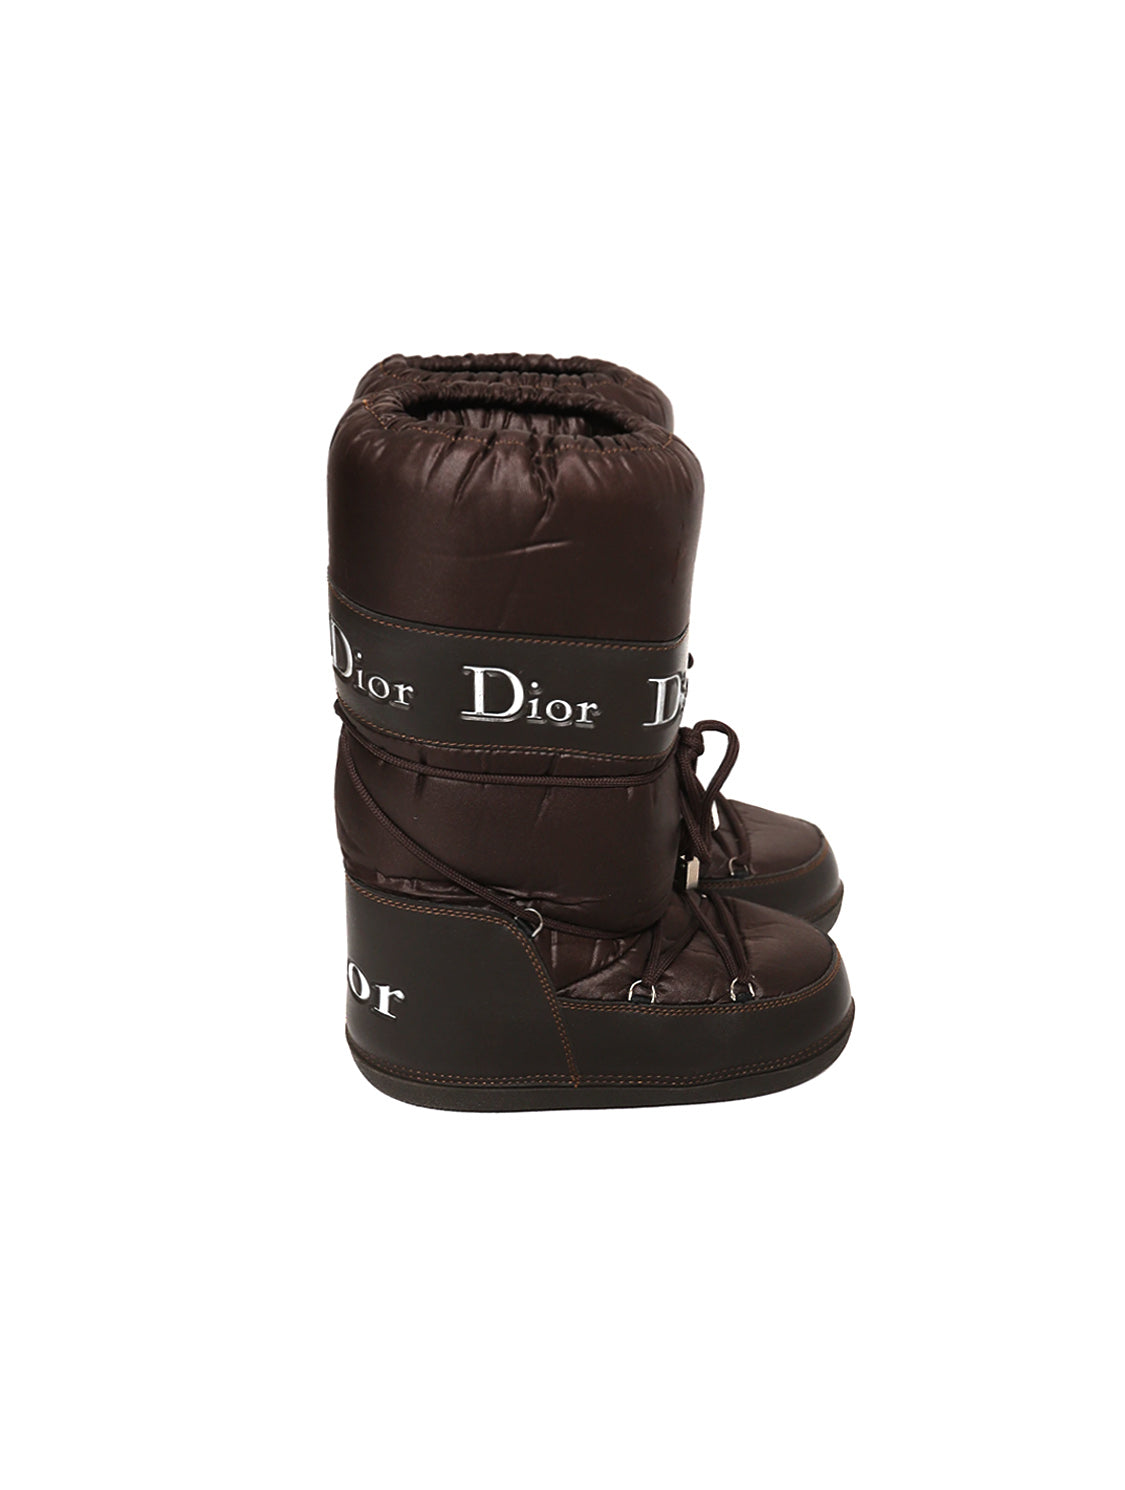 Christian Dior 2000s Nylon Brown Moon Boots